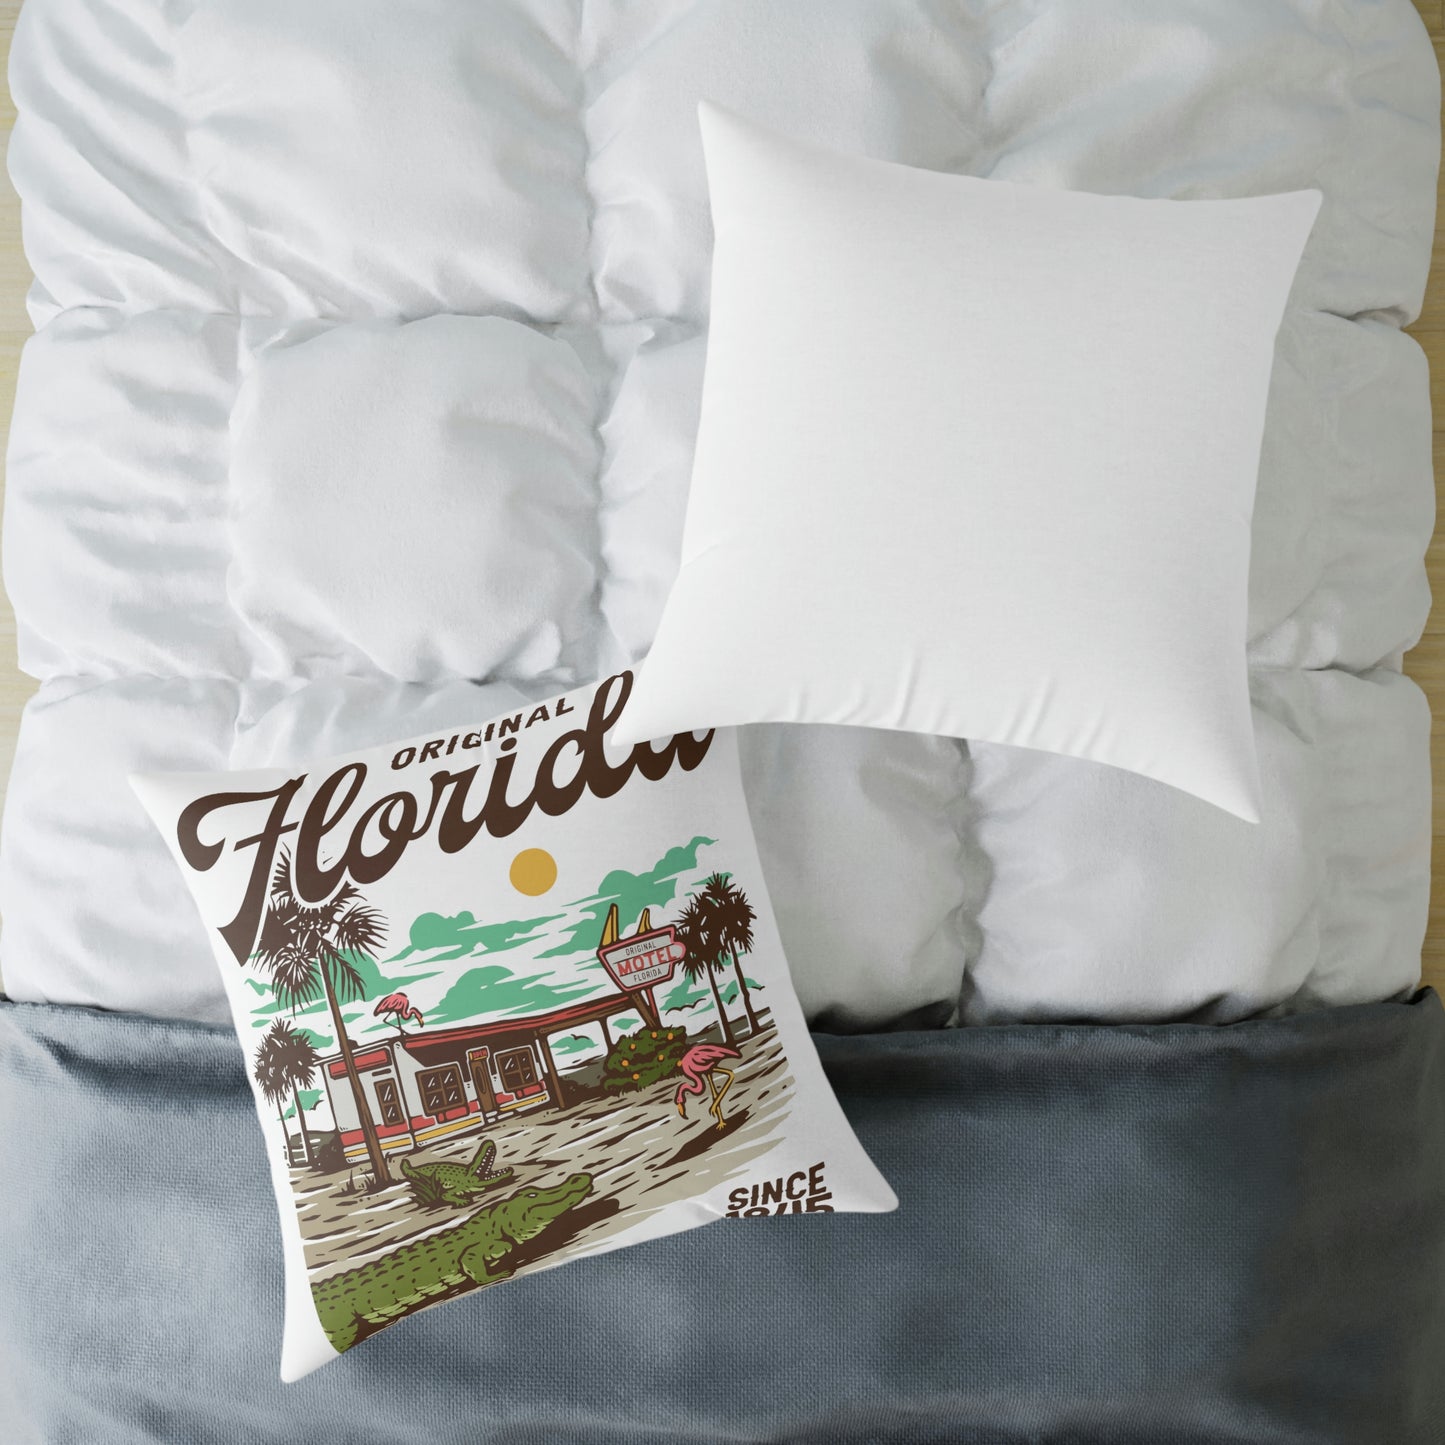 Original Florida - Alligator - white - Spun Polyester Pillow